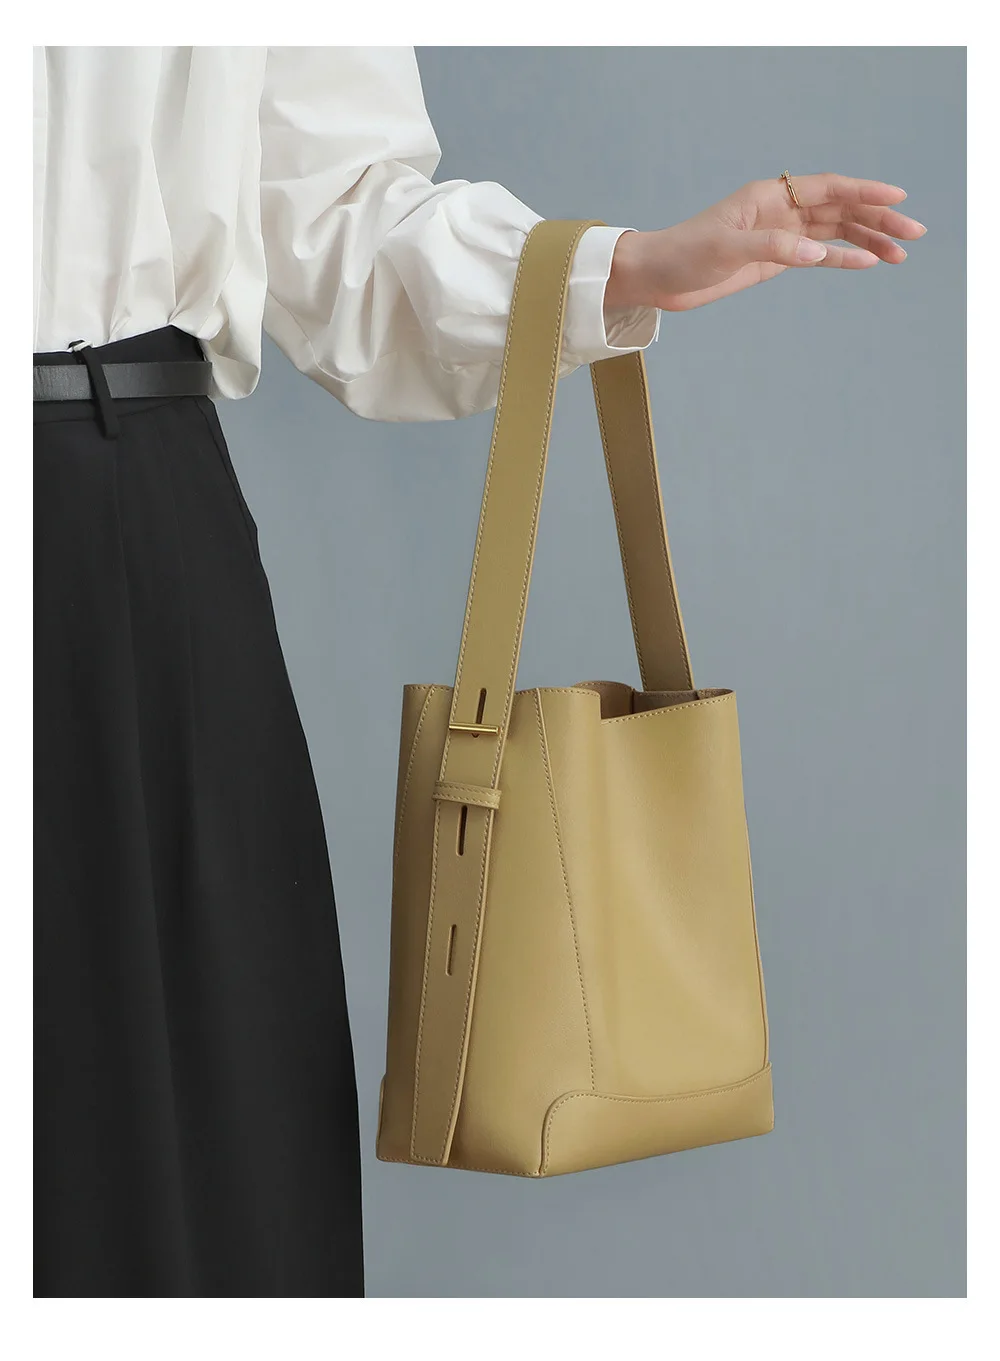 Wholesale Luxury Handbags For Women Fashion Genuine Leather Vintage Large Capacity Women Shoulder Bag Ladies Portable Tote Bag